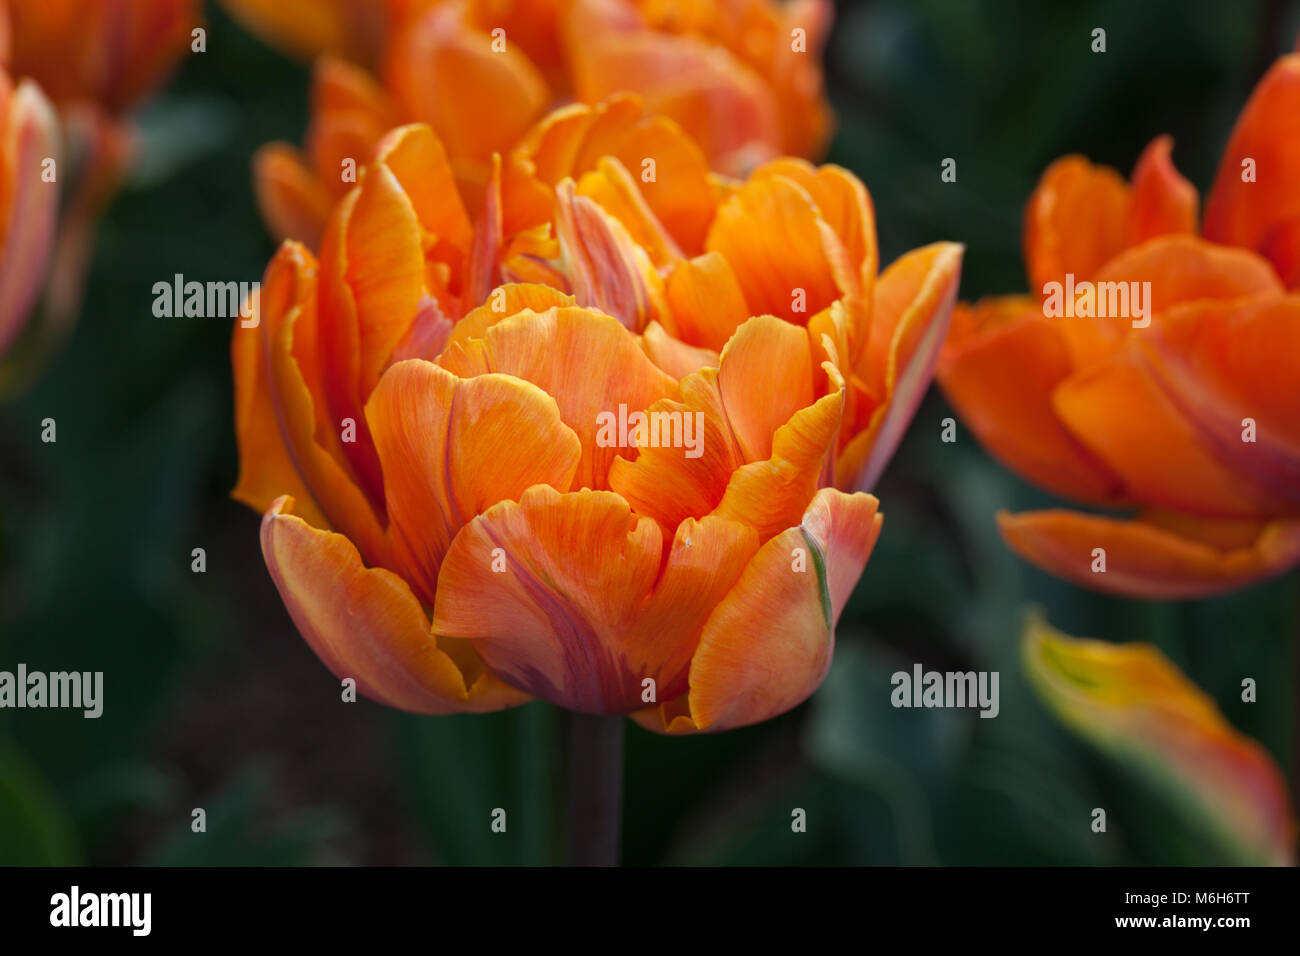 'Orange Princess' Double Late Tulip, Sen fylldblommig tulpan (Tulipa gesneriana) Stock Photo